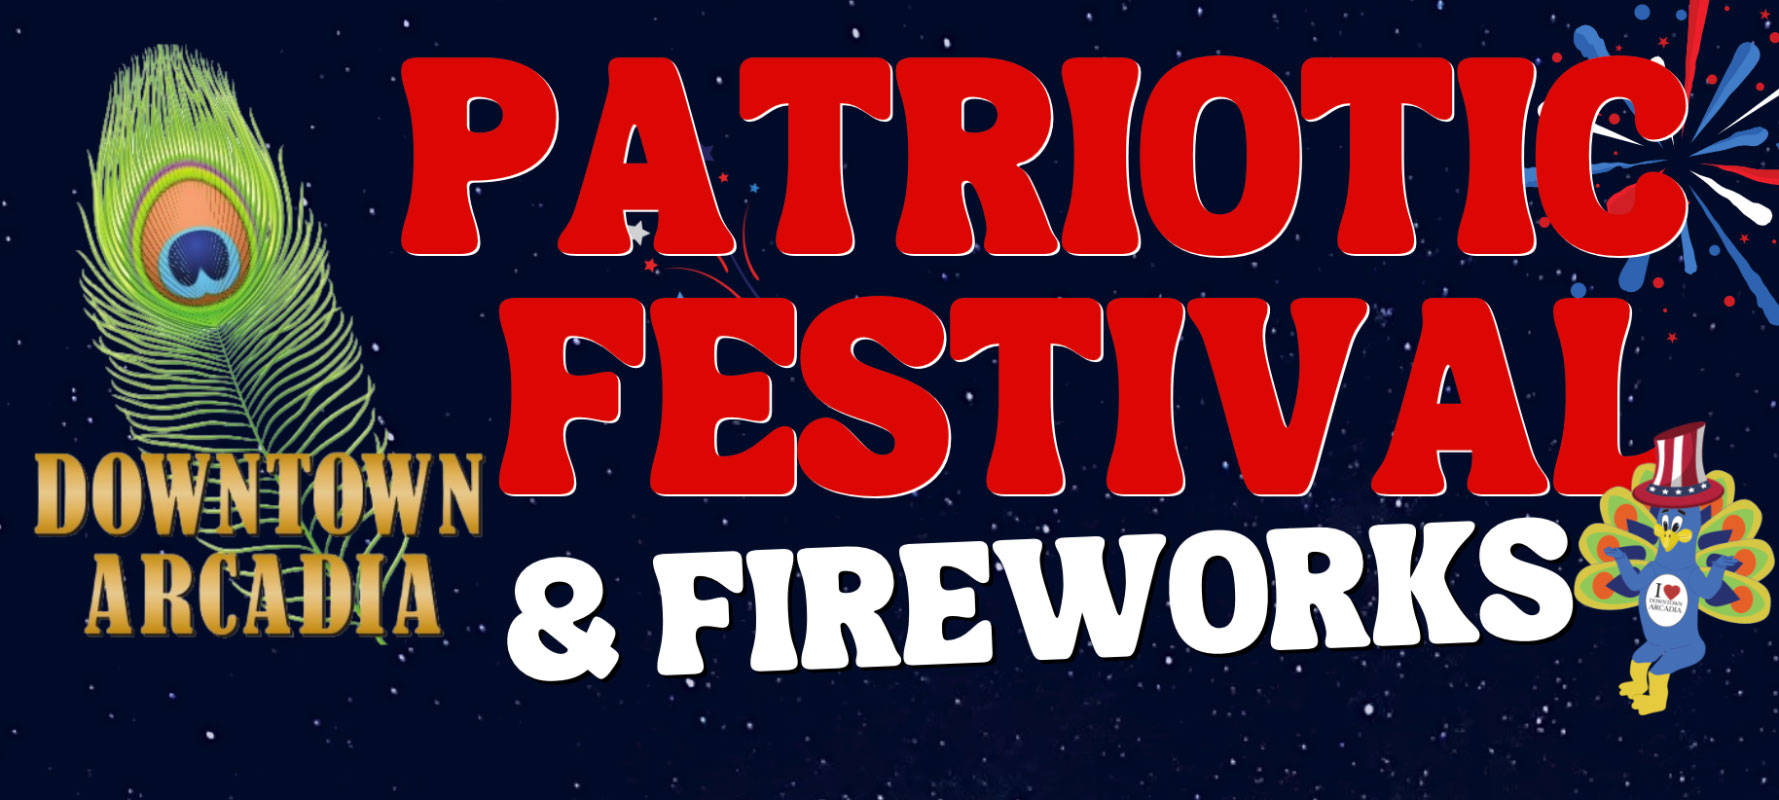 Patriotic Festival and Fireworks Banner